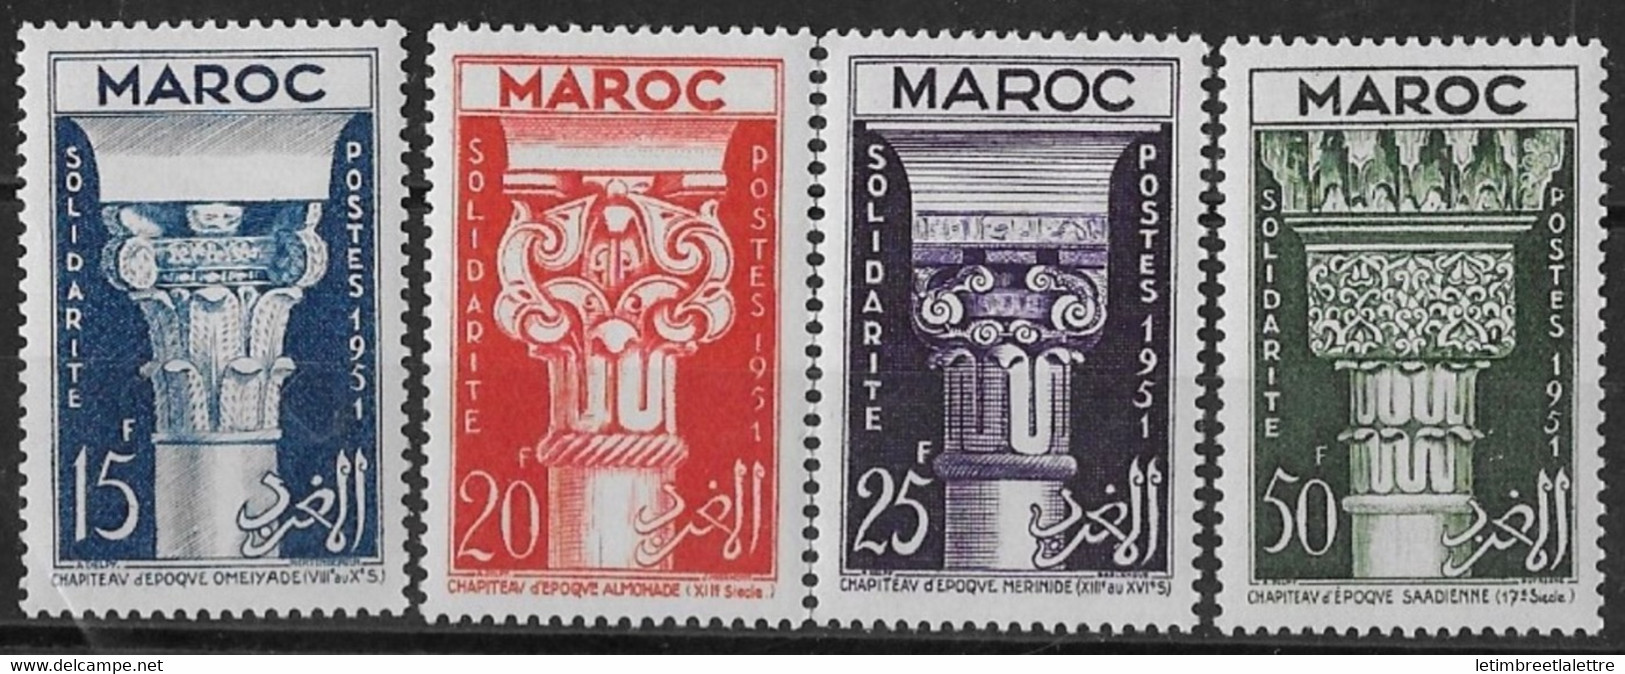 ⭐ Maroc - YT N° 315 à 319 ** - Neuf Sans Charnière - 1952 ⭐ - Neufs